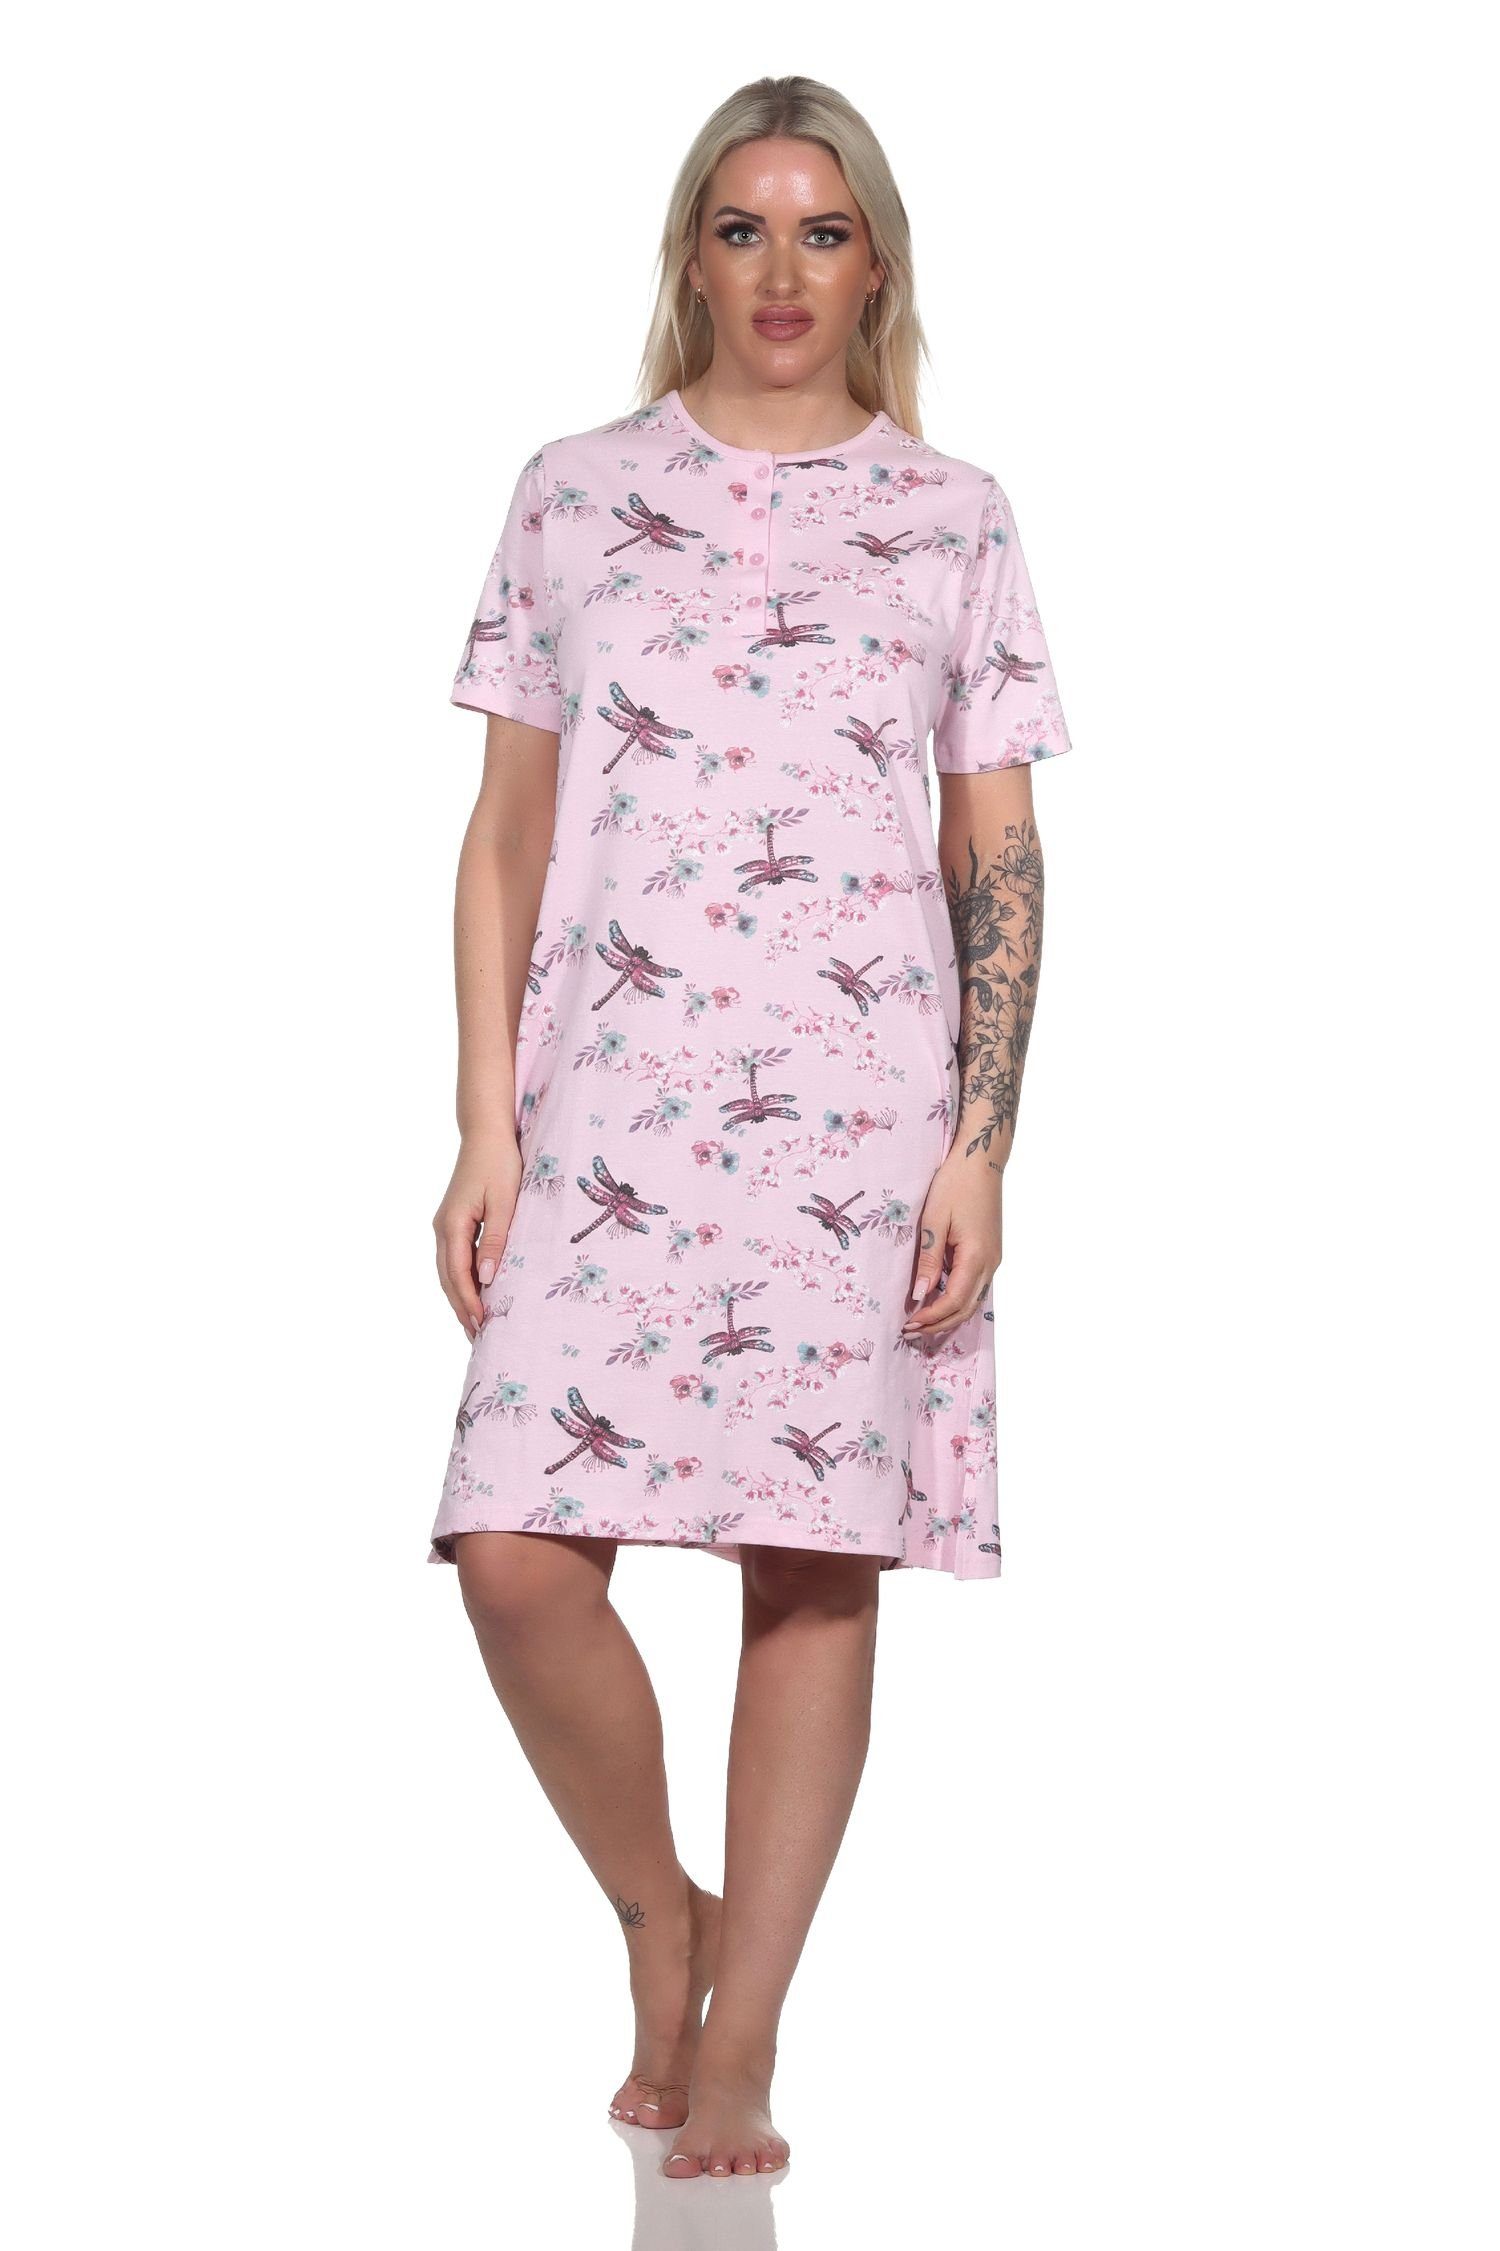 Normann Nachthemd Damen kurzarm und rosa floraler Hals Nachthemd Alloverprint am Knopfleiste